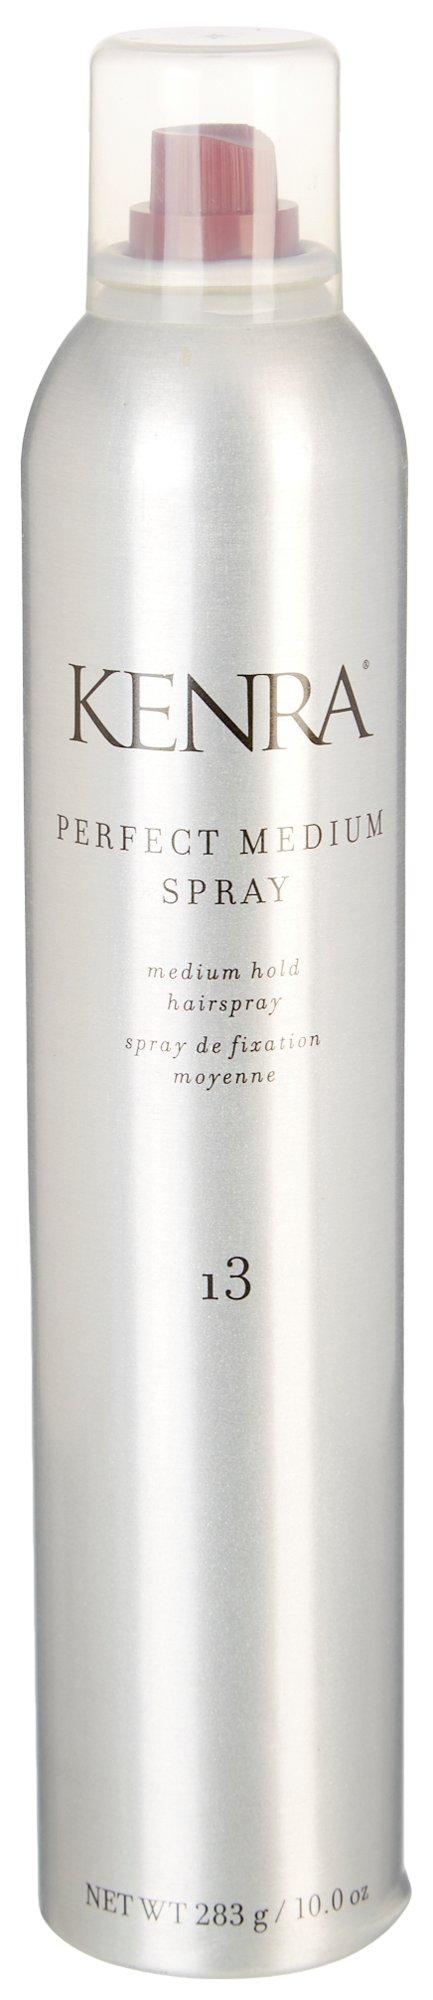 Kenra Perfect Medium Hold 13 Hair Spray 10 oz.